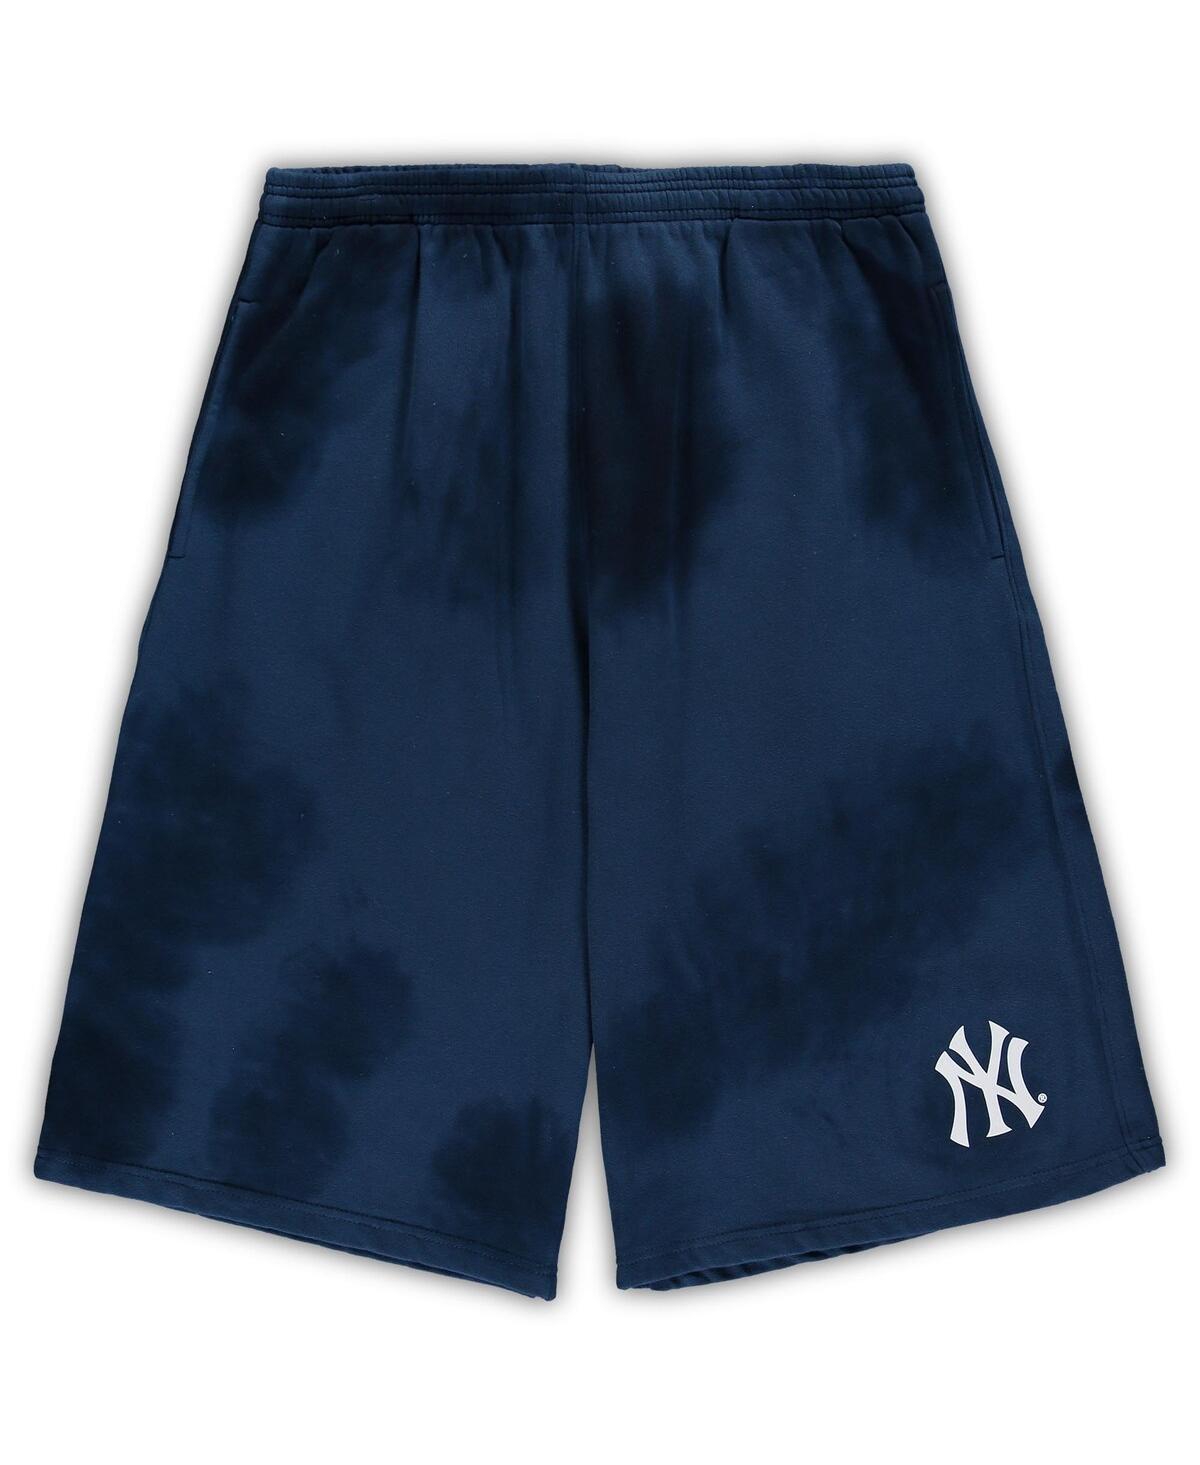 Men's Navy New York Yankees Big and Tall Tye Dye Fleece Shorts - Navy